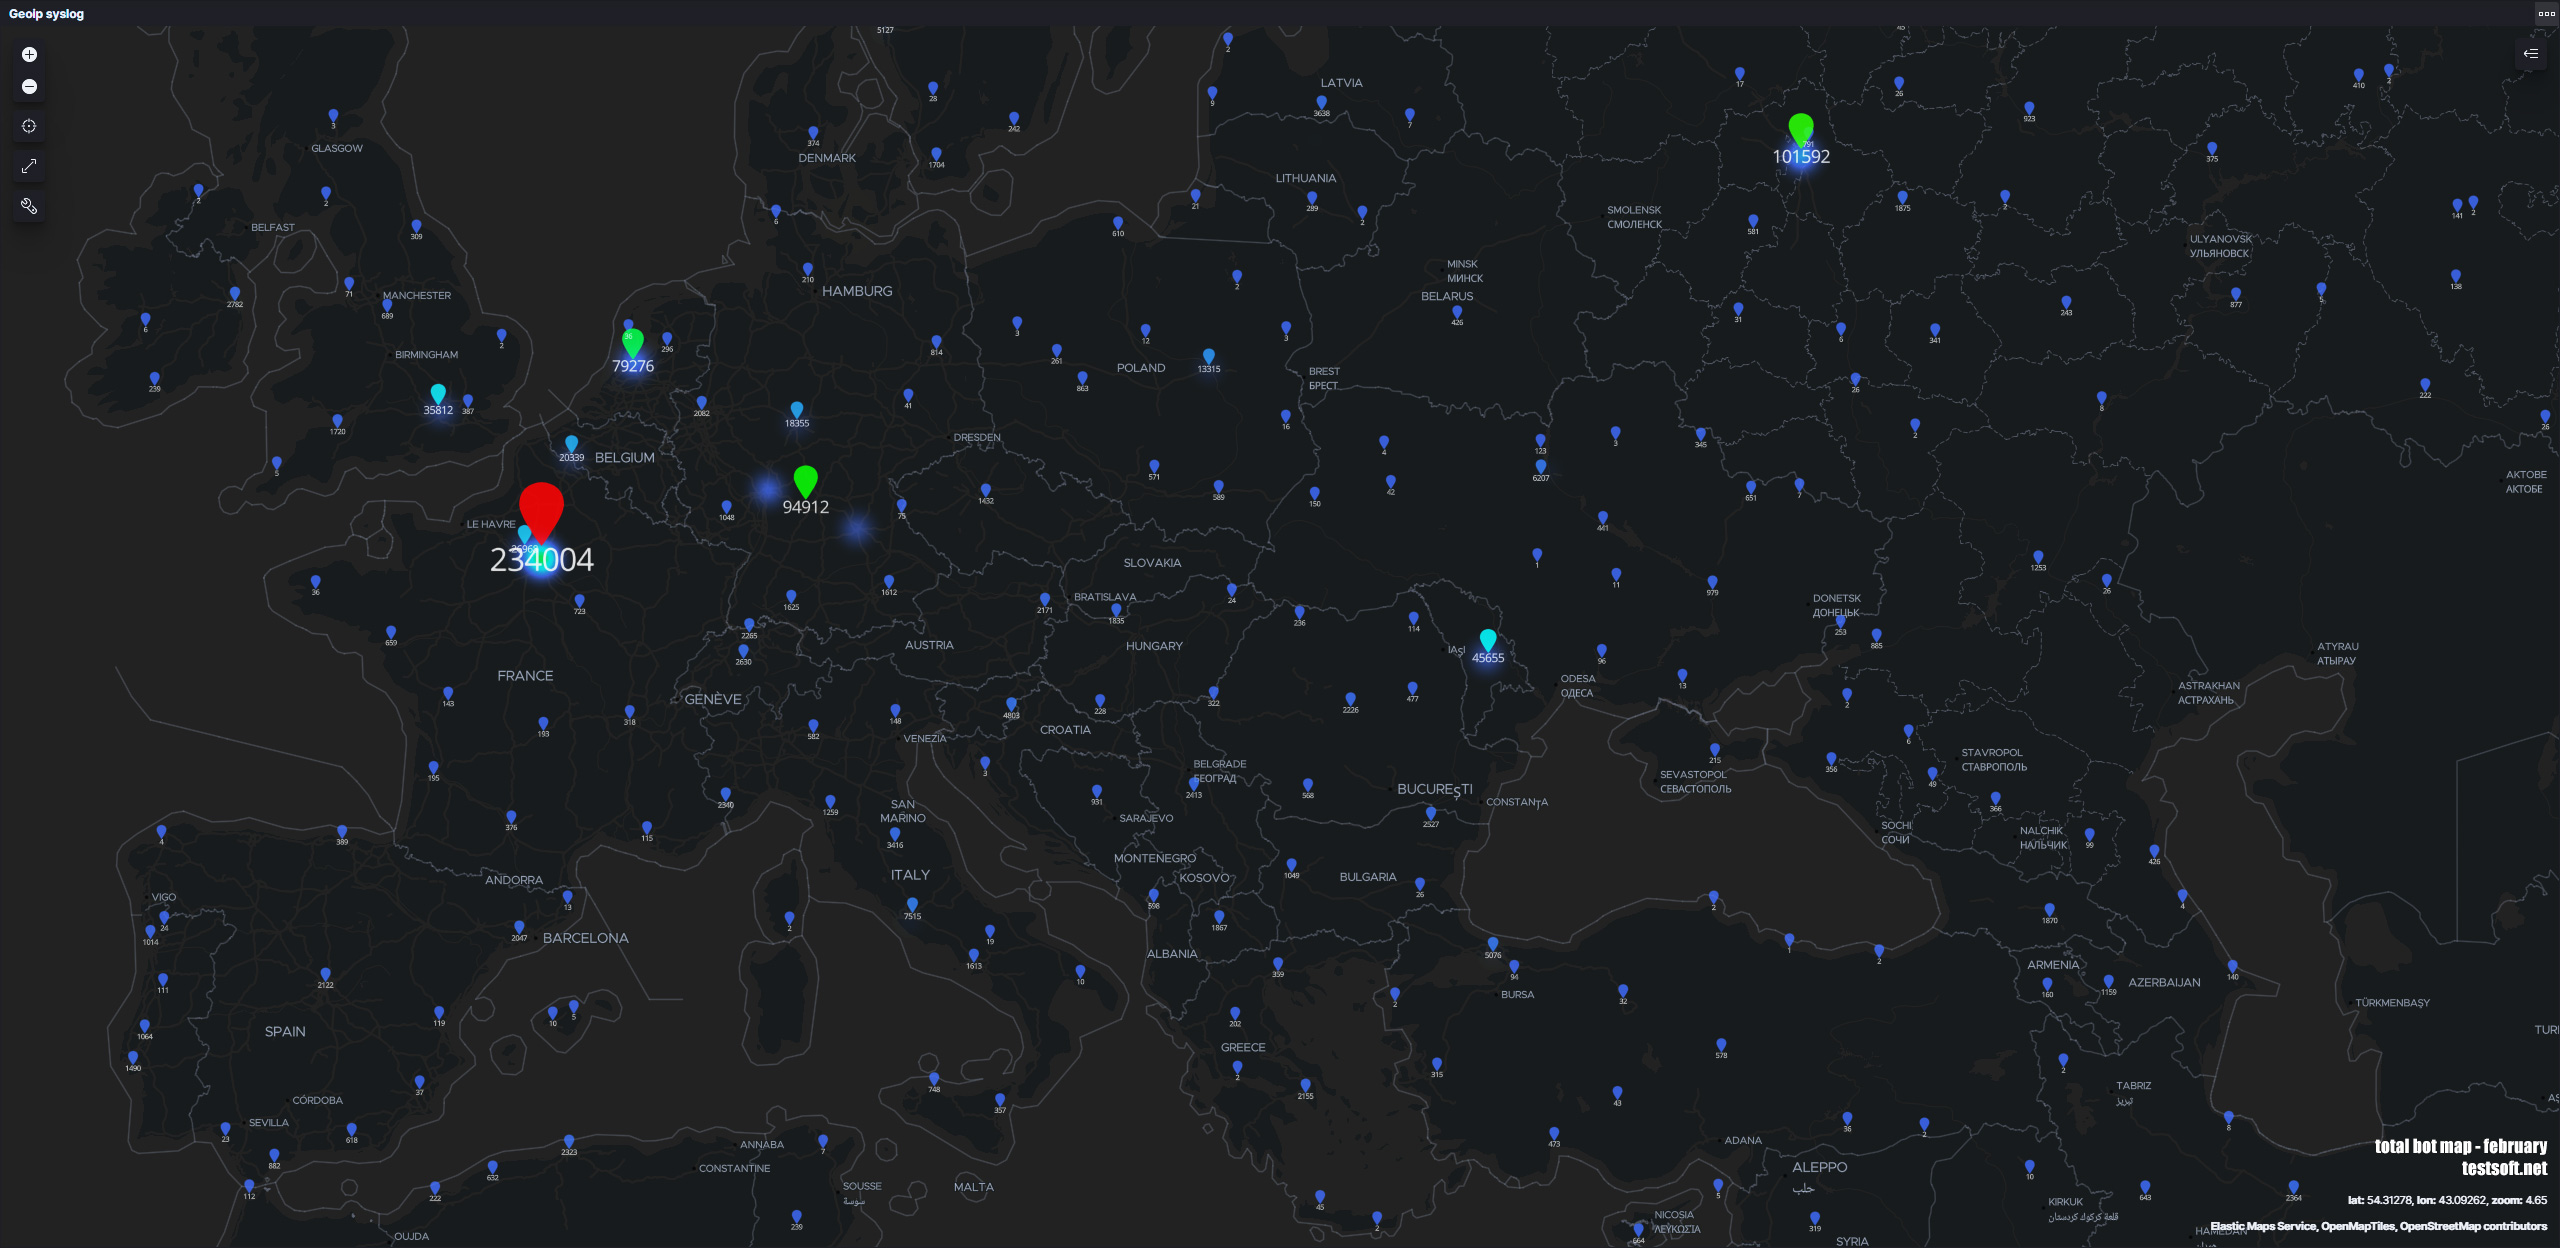 testsoft.net – web bot map eu – february 2021